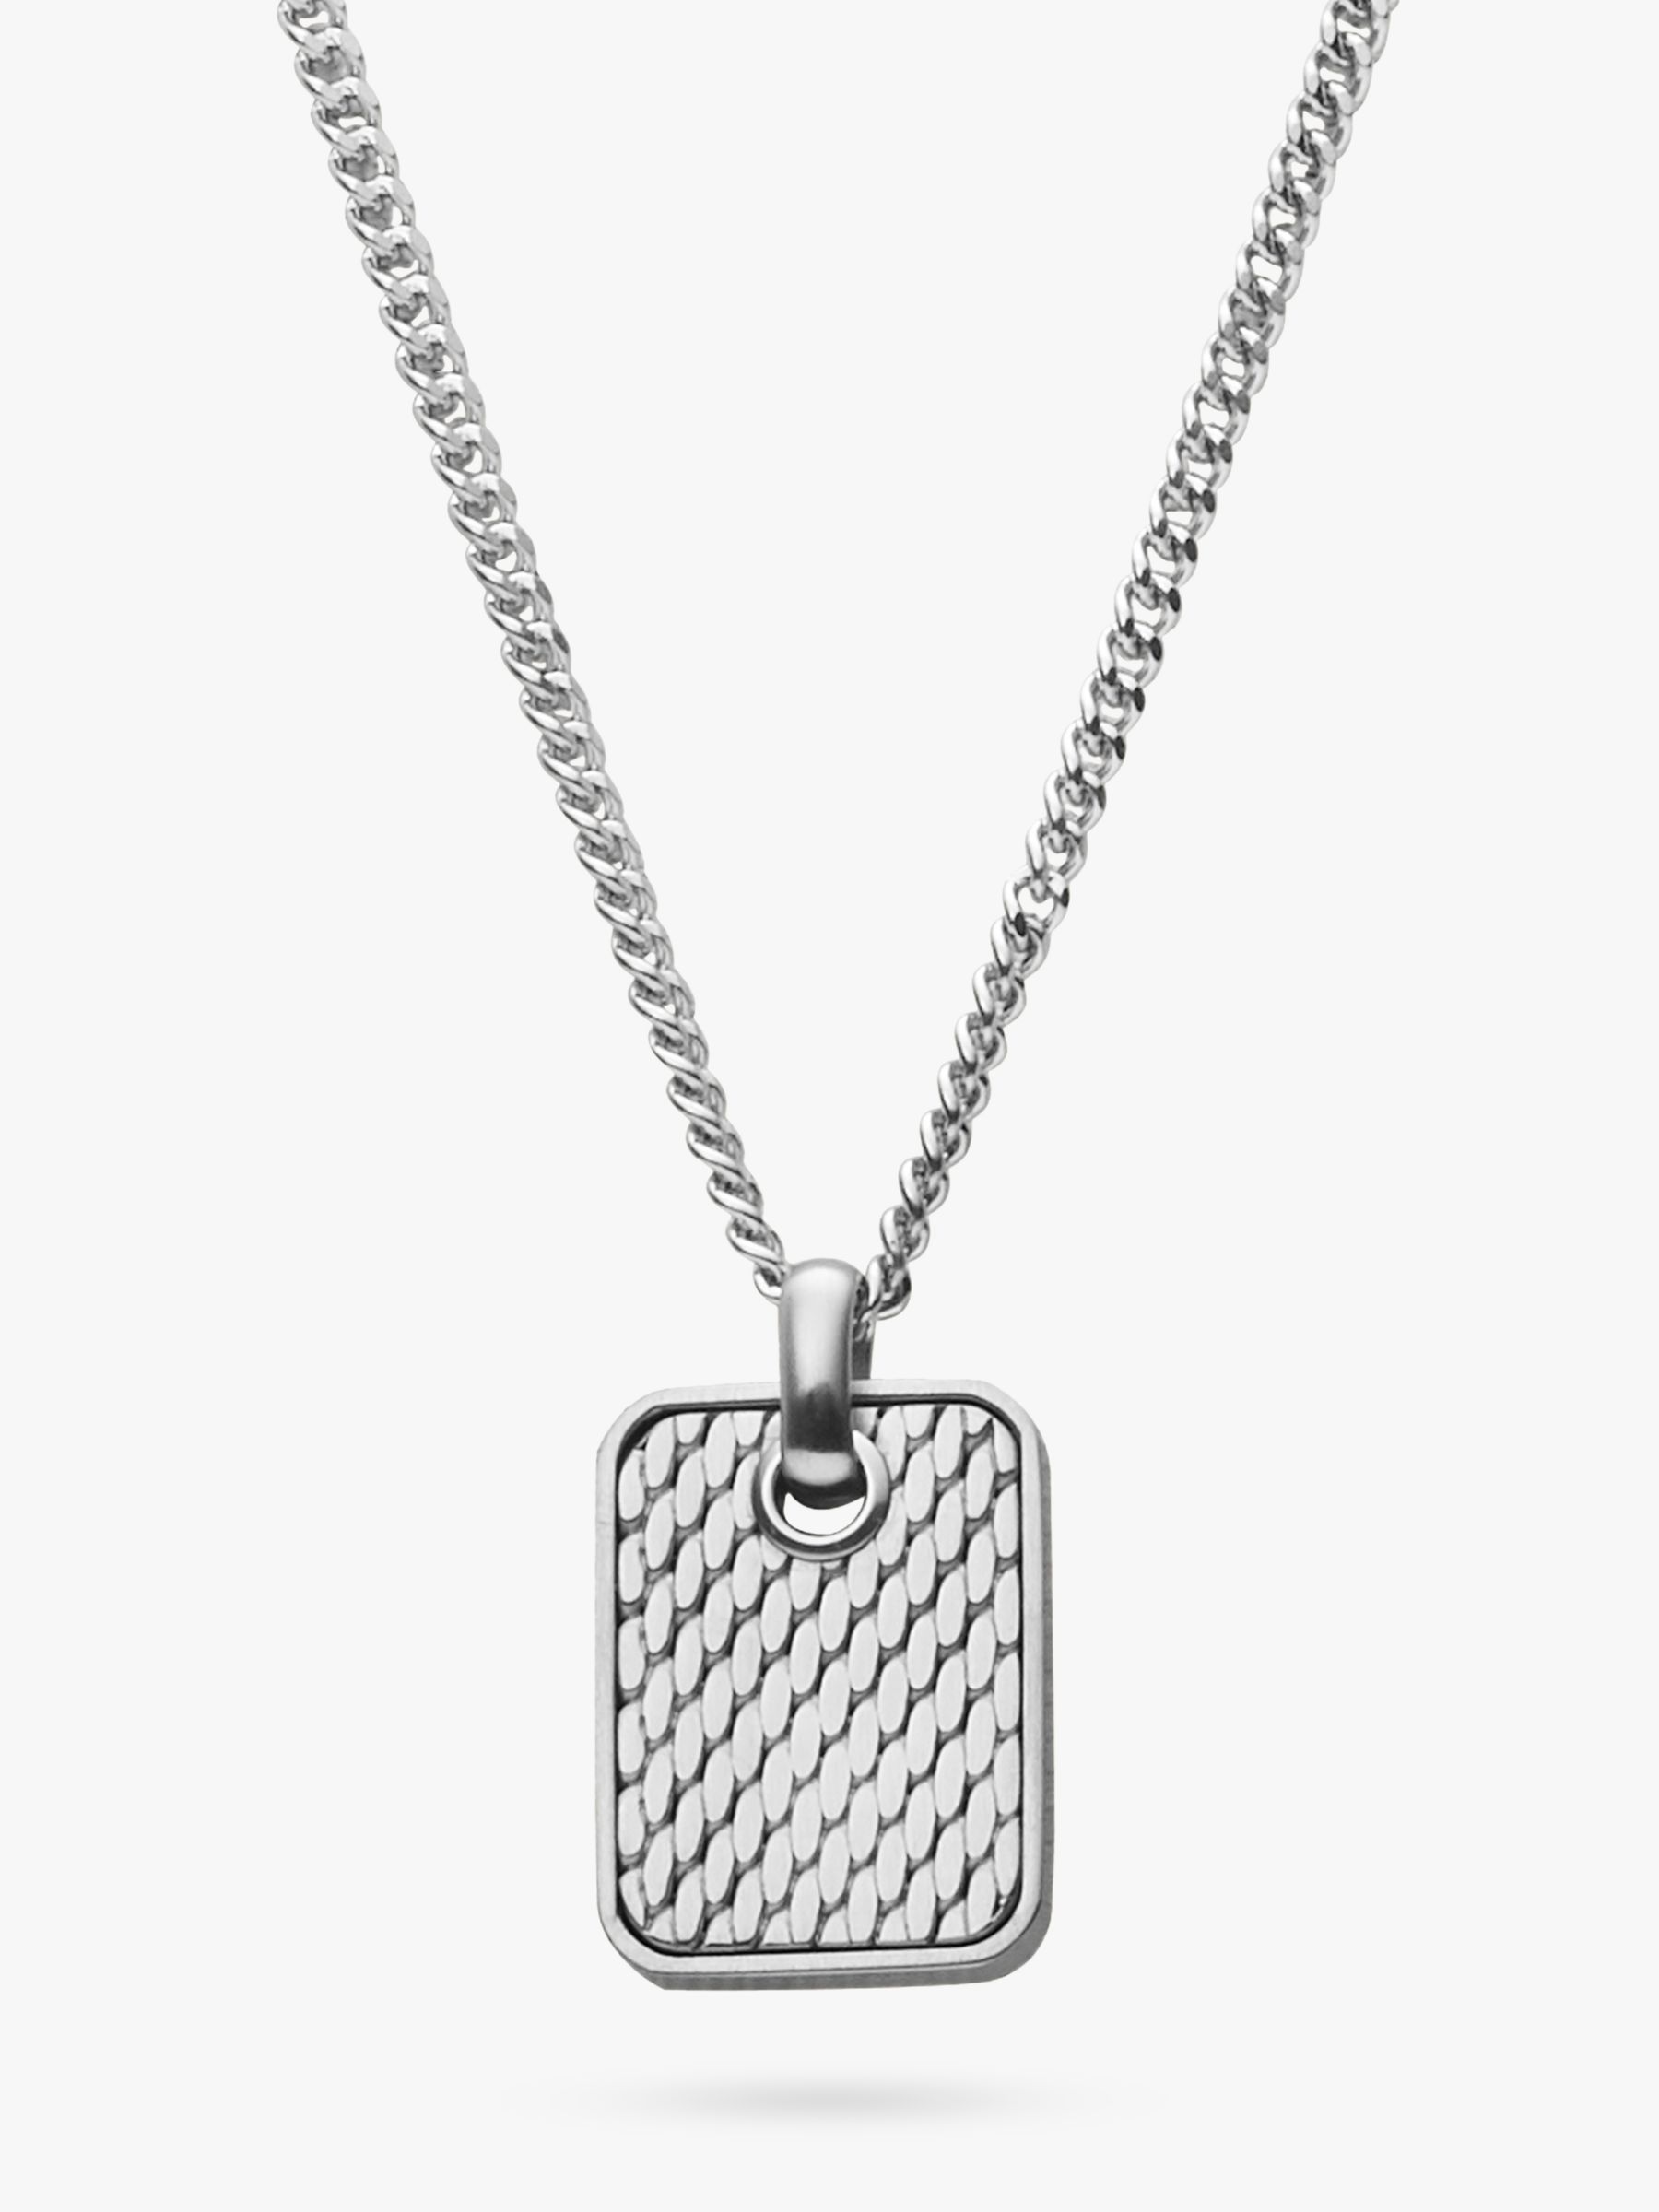 Skagen Men's Textured Pendant Necklace, Silver